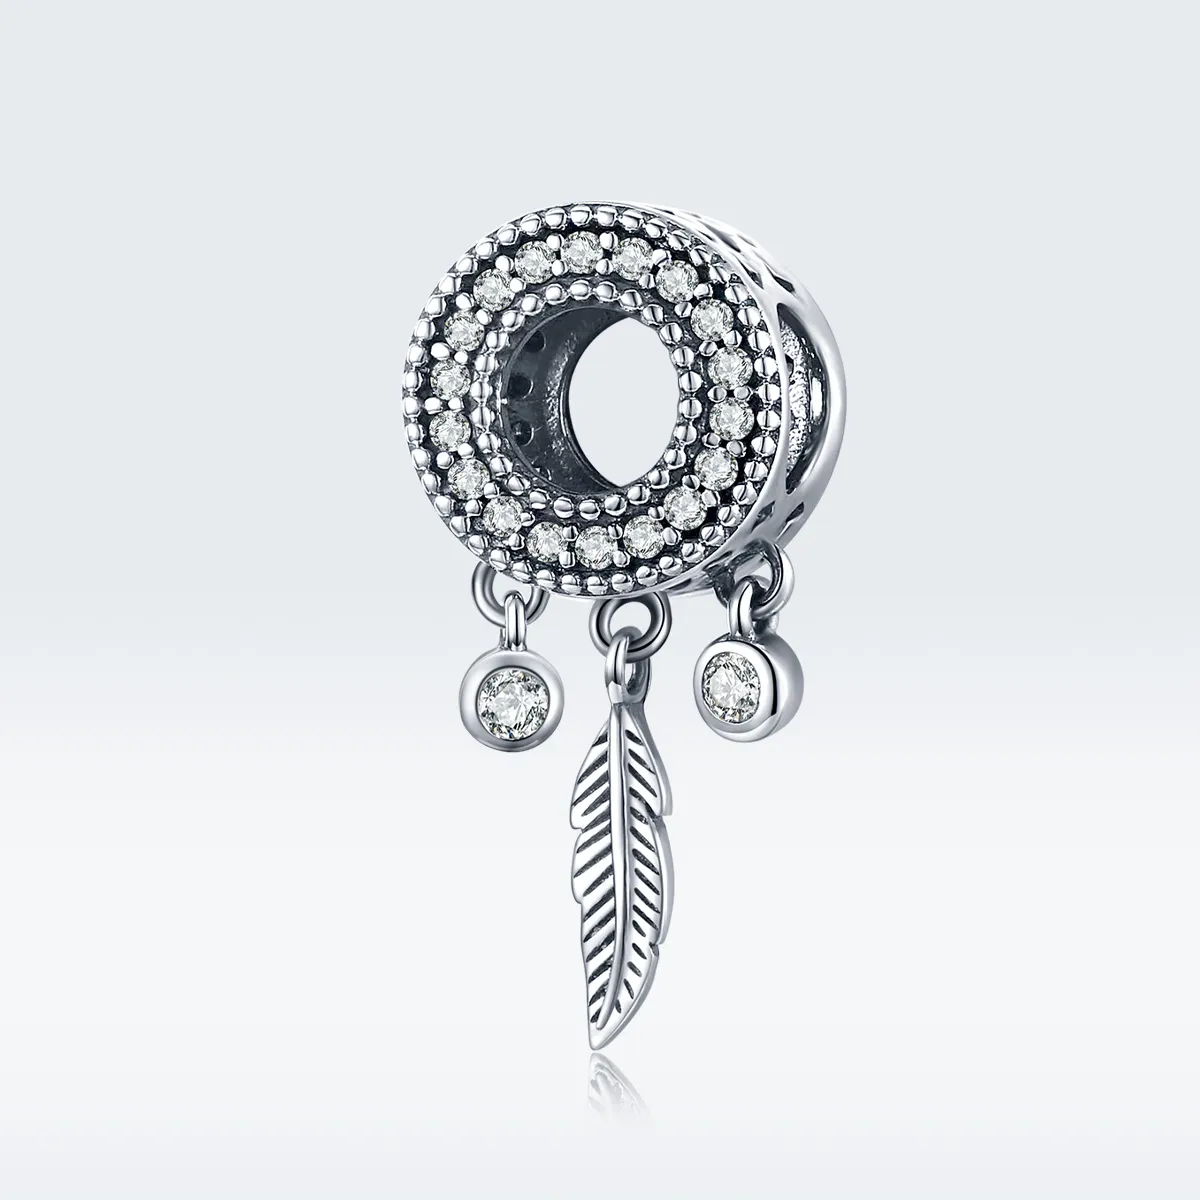 Pandora Style Silver Shiny Feather Charm - SCC1550